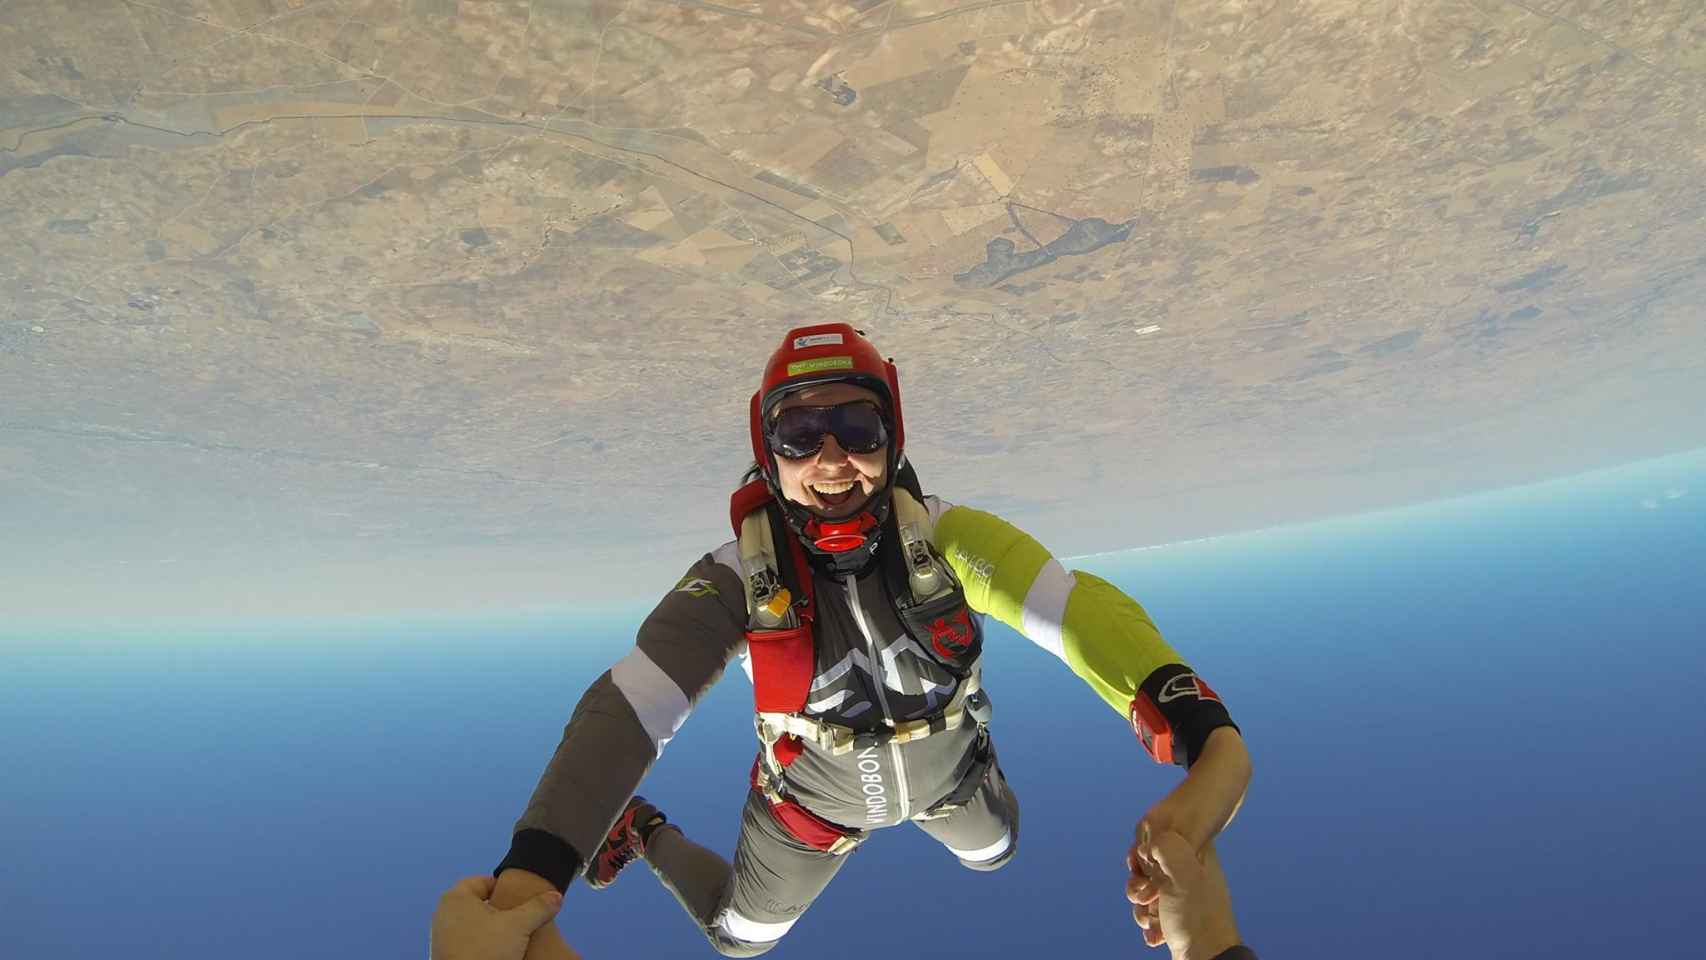 Granero practicando paracaidismo.